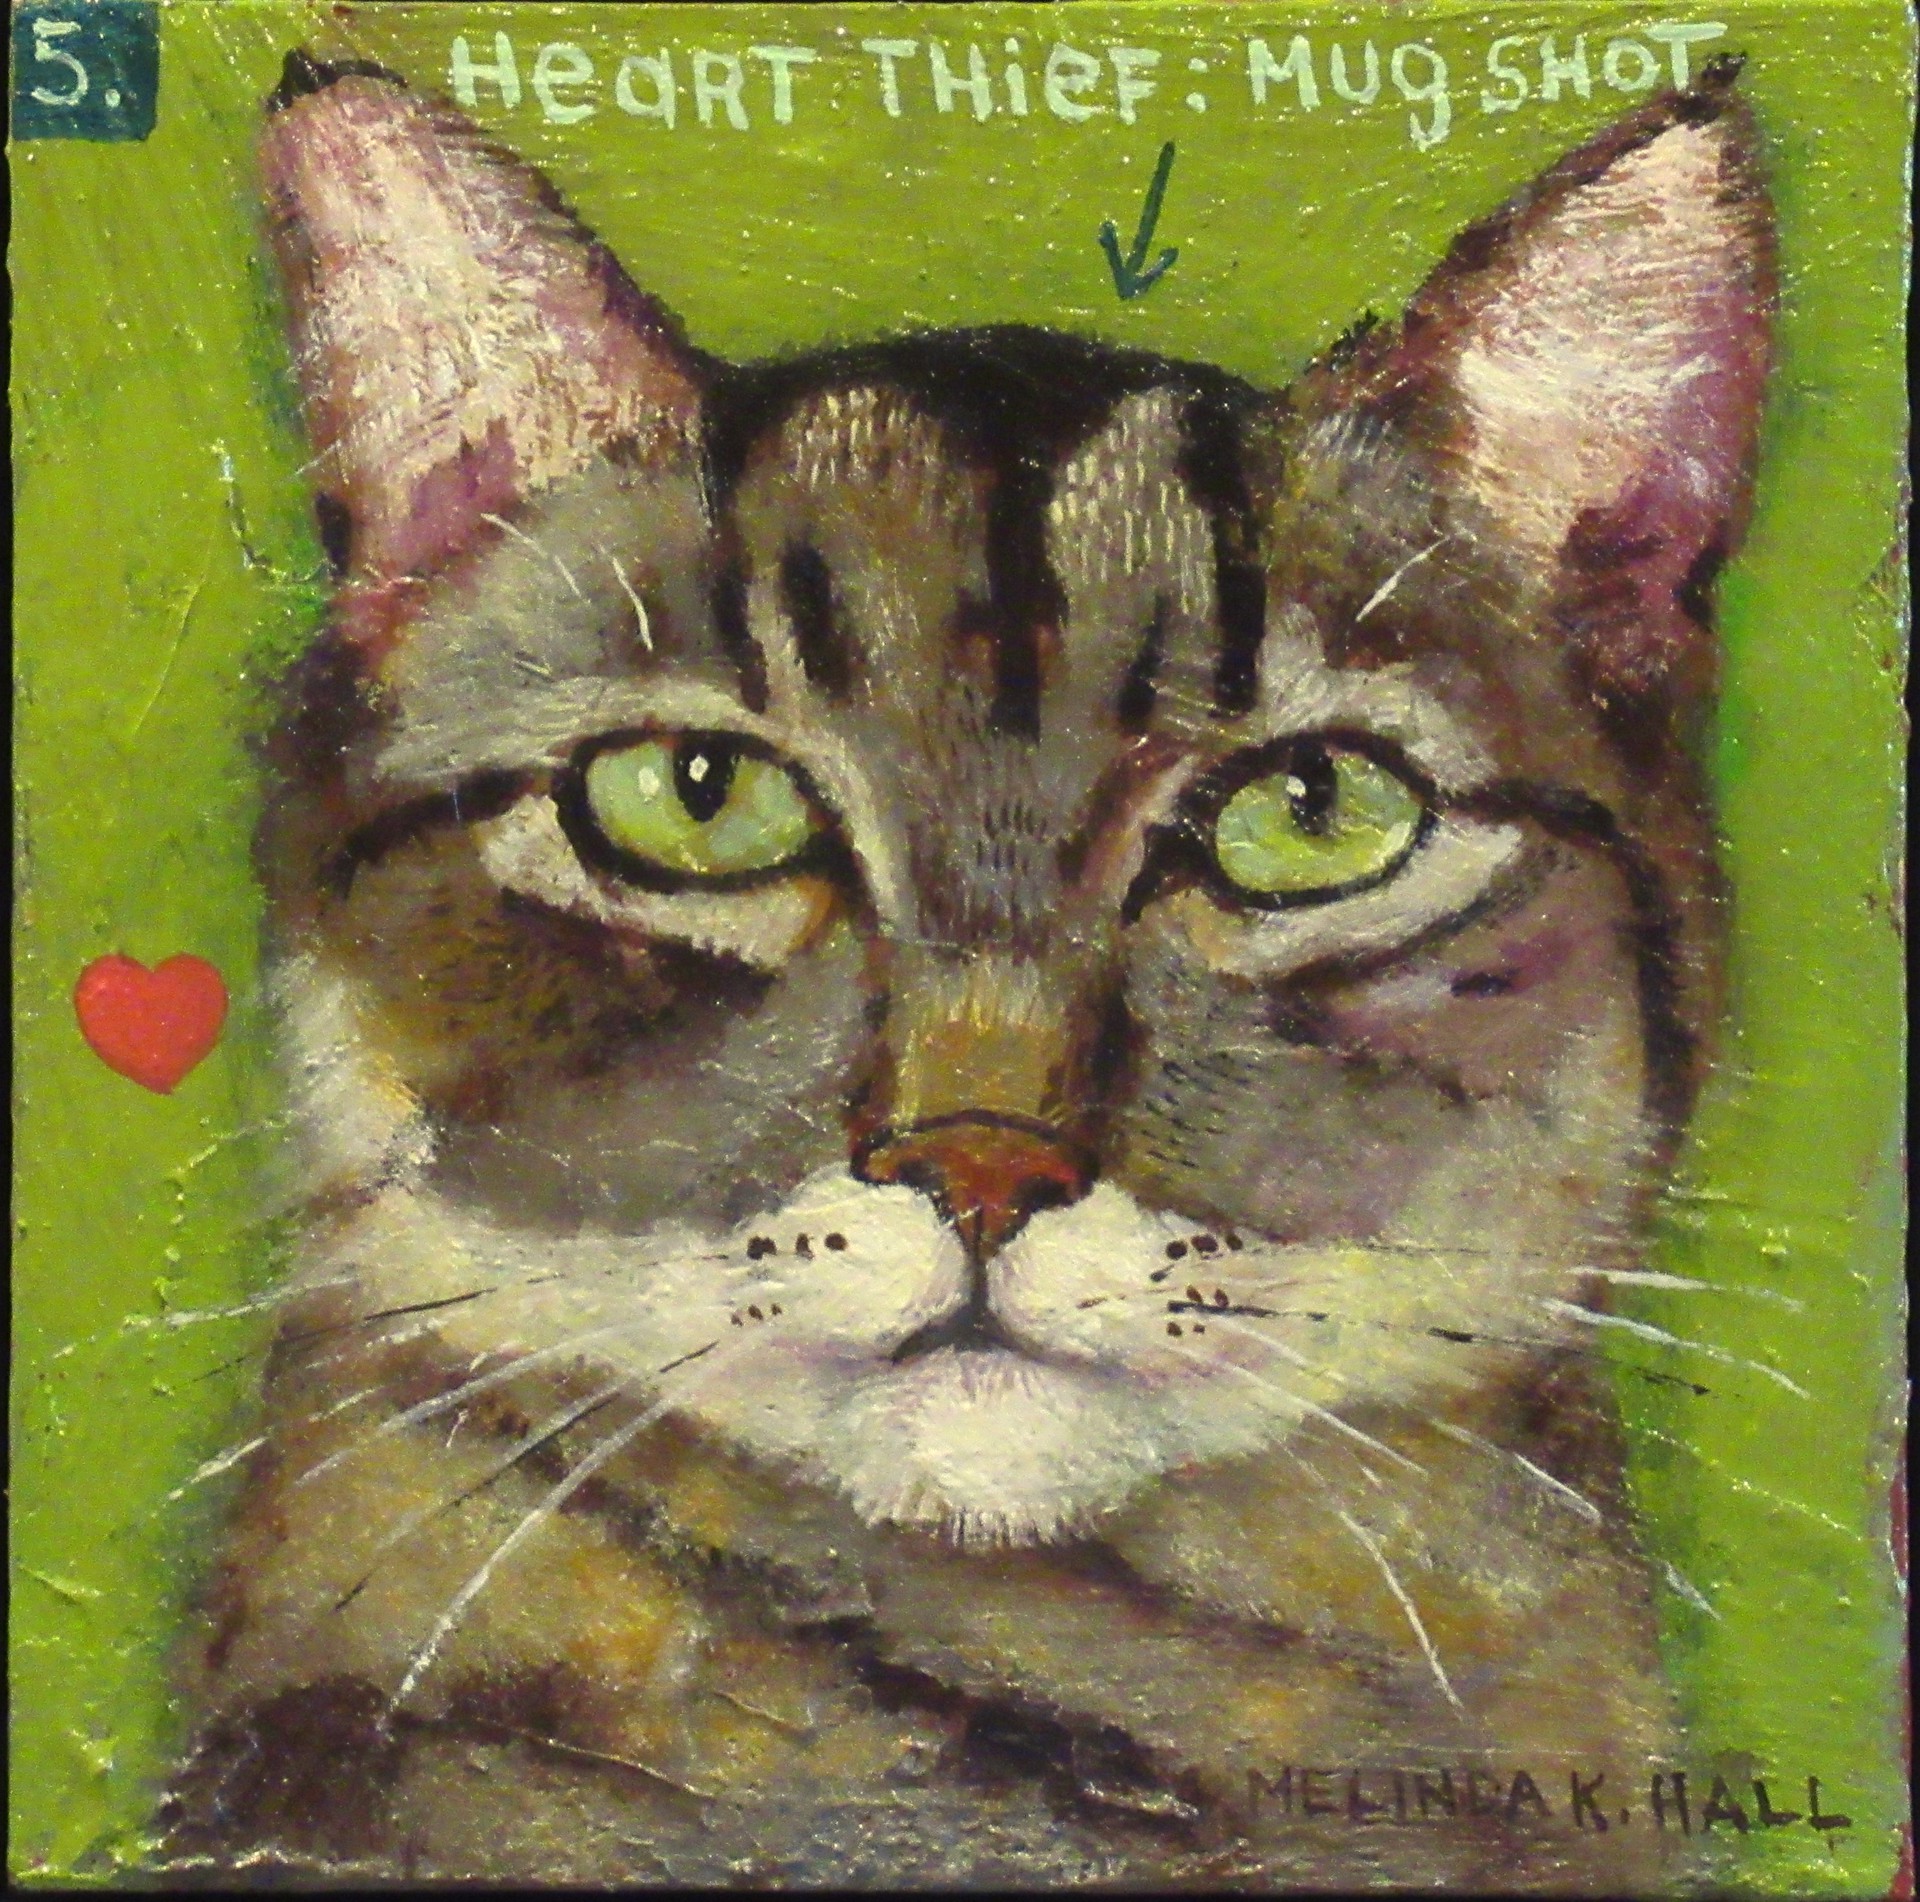 Heart Thief:  Mugshot #5 by Melinda K. Hall